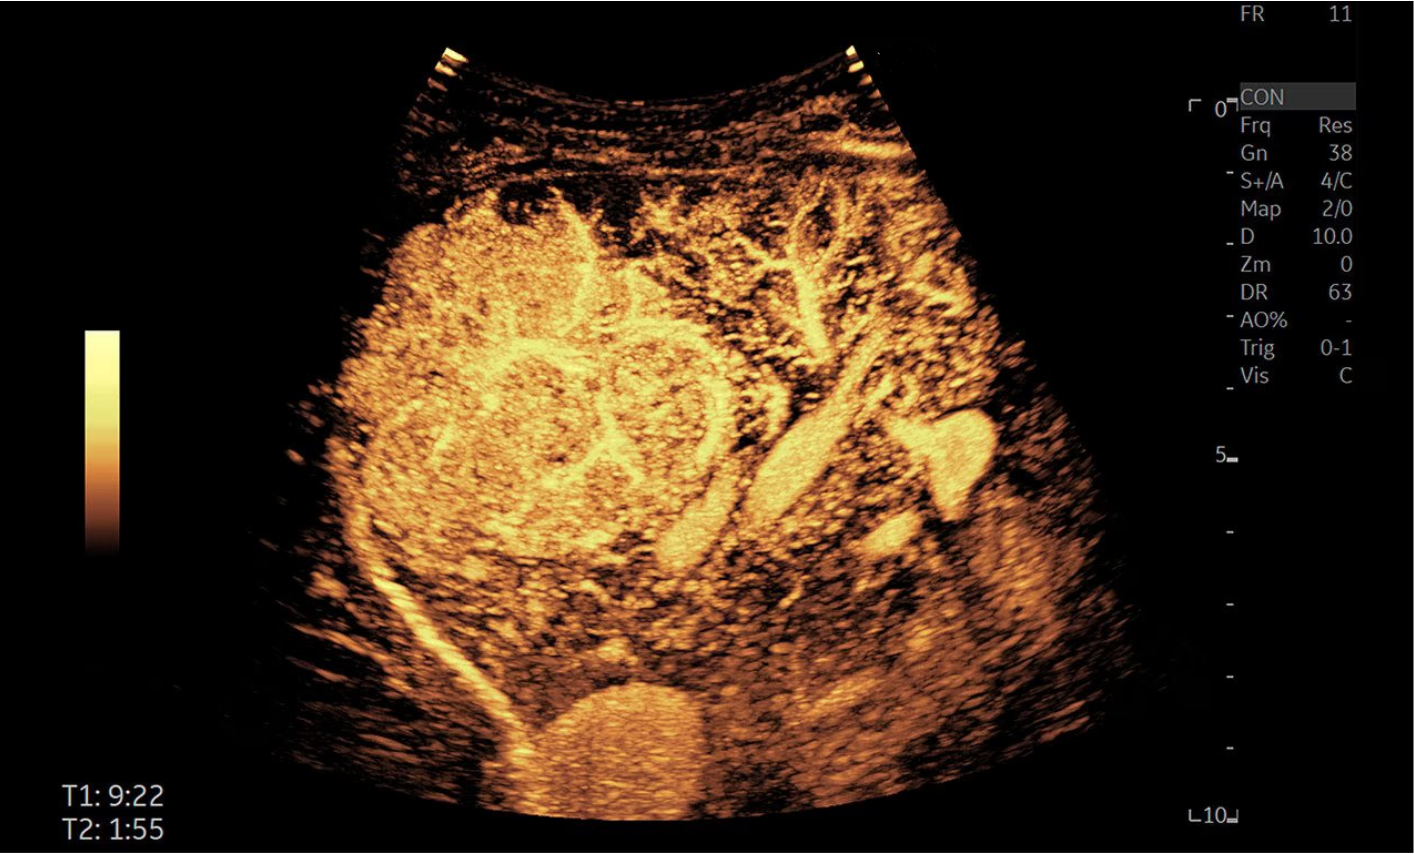 CEUS ultrasound image